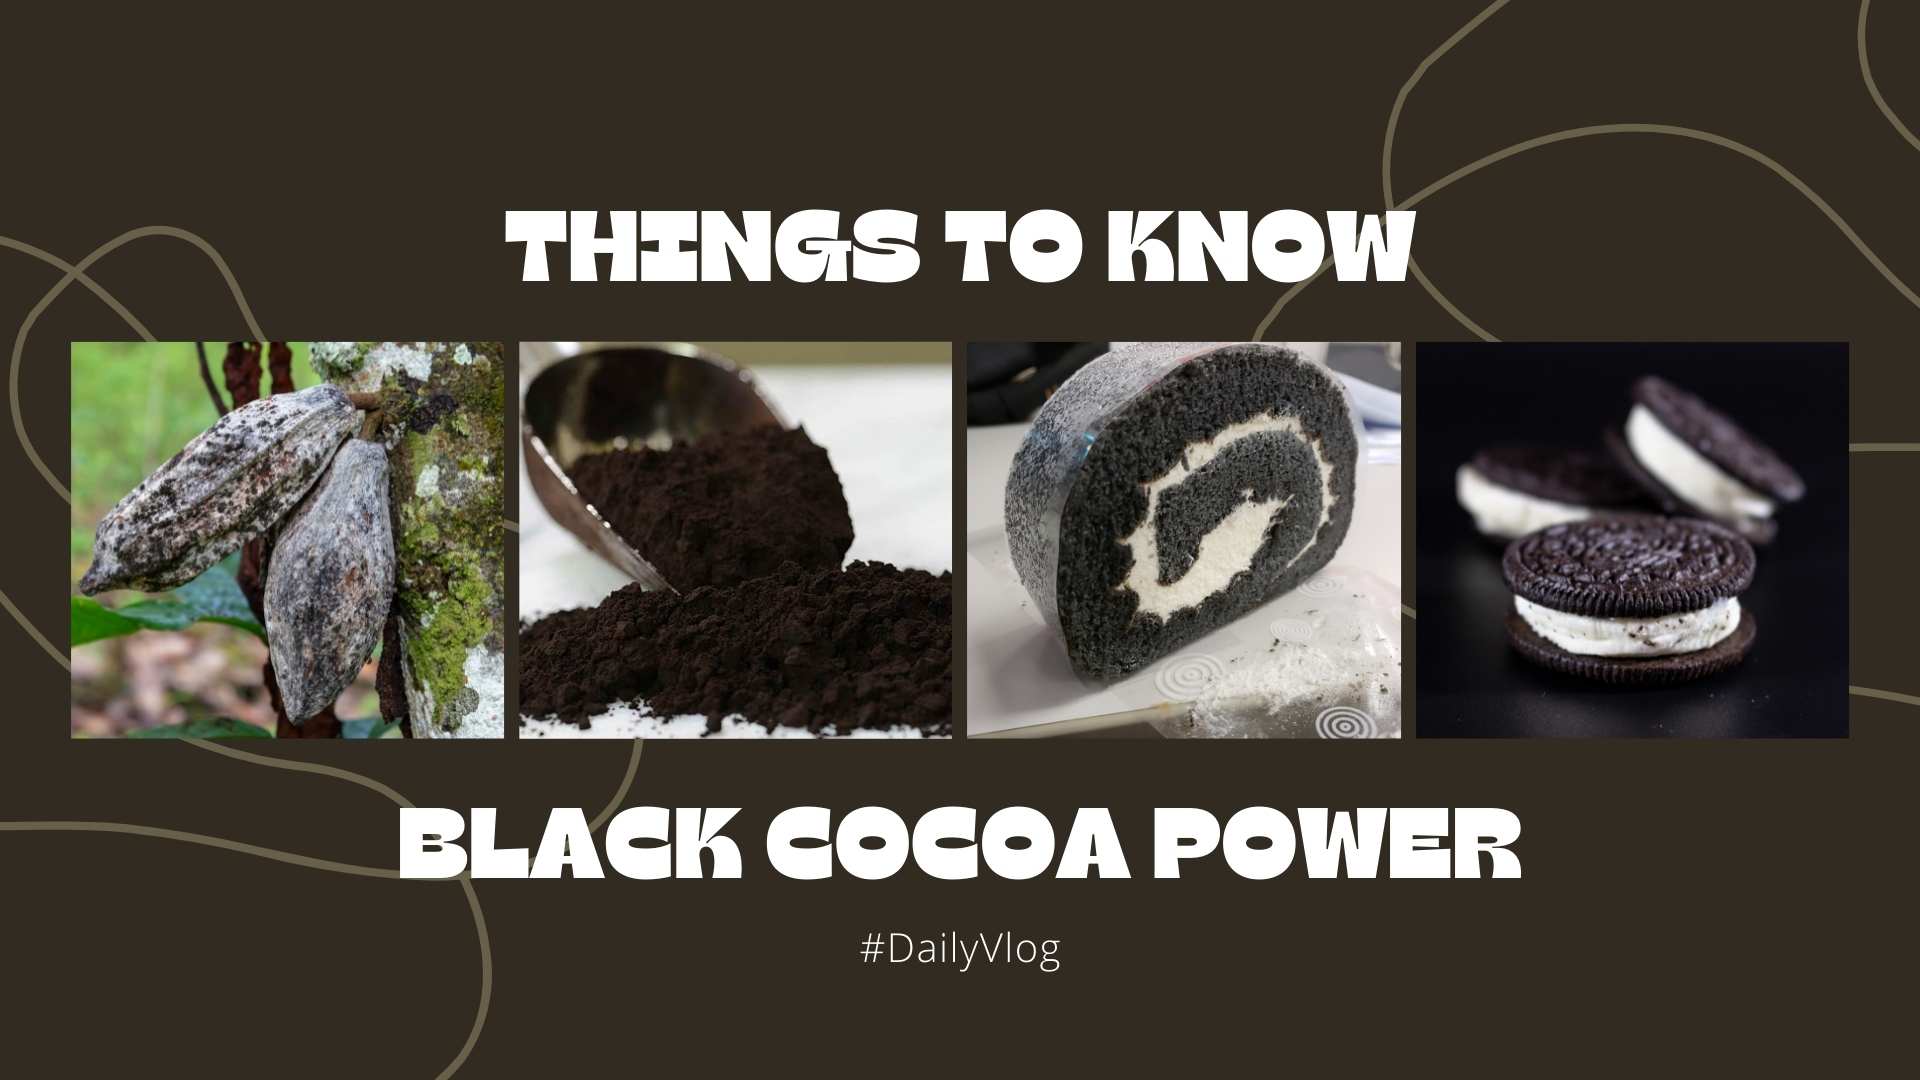 Reasons you should use black cocoa powder